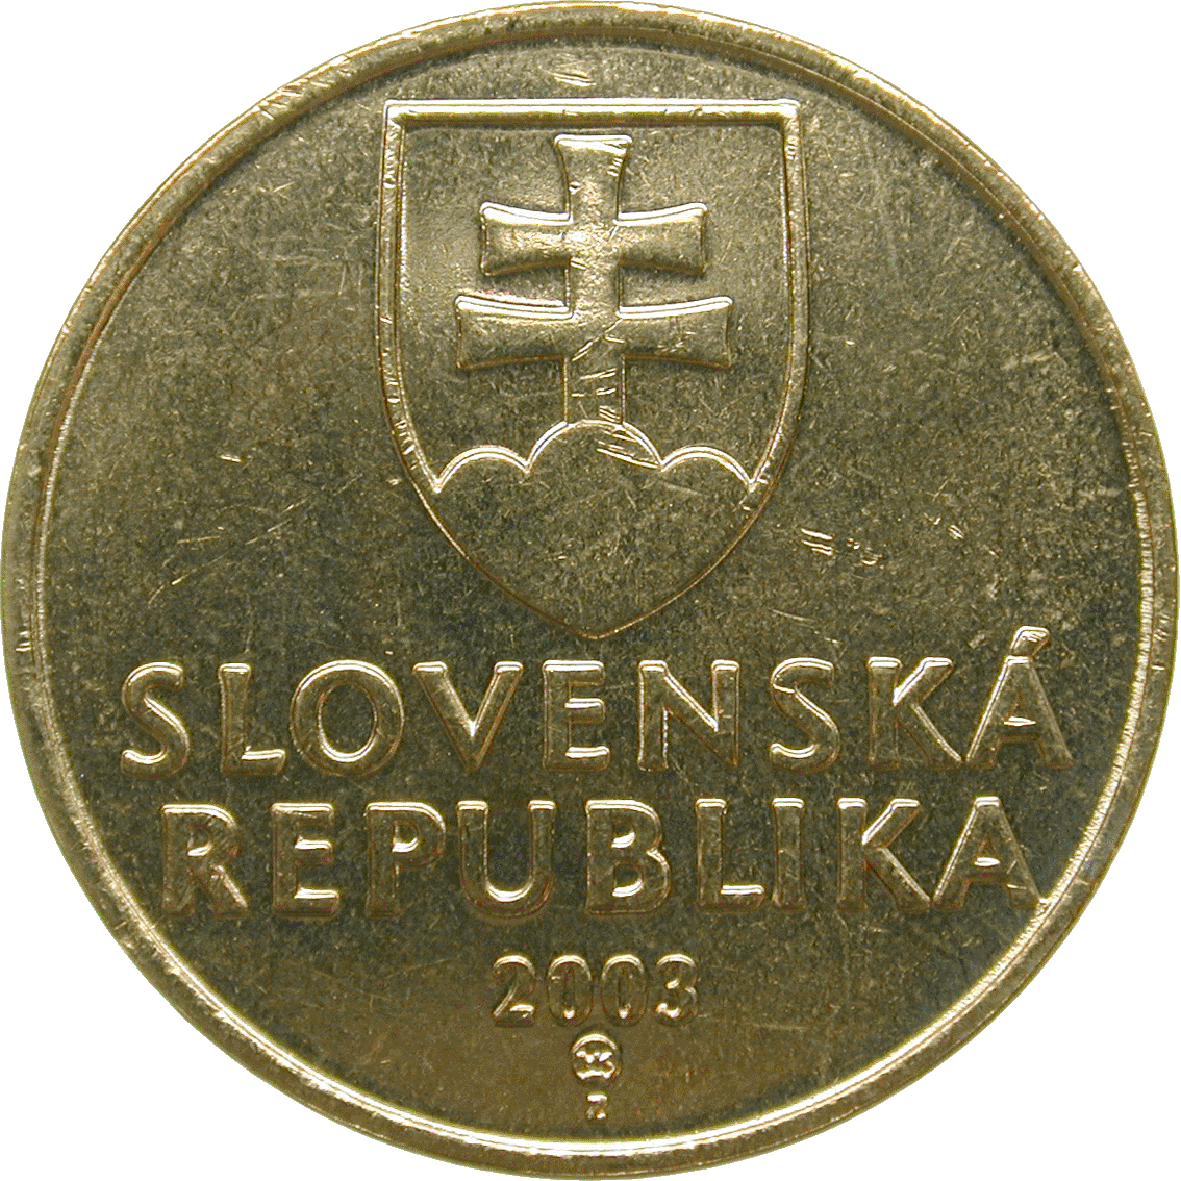 Slovak Republic, 10 Koruna 2003 (obverse)